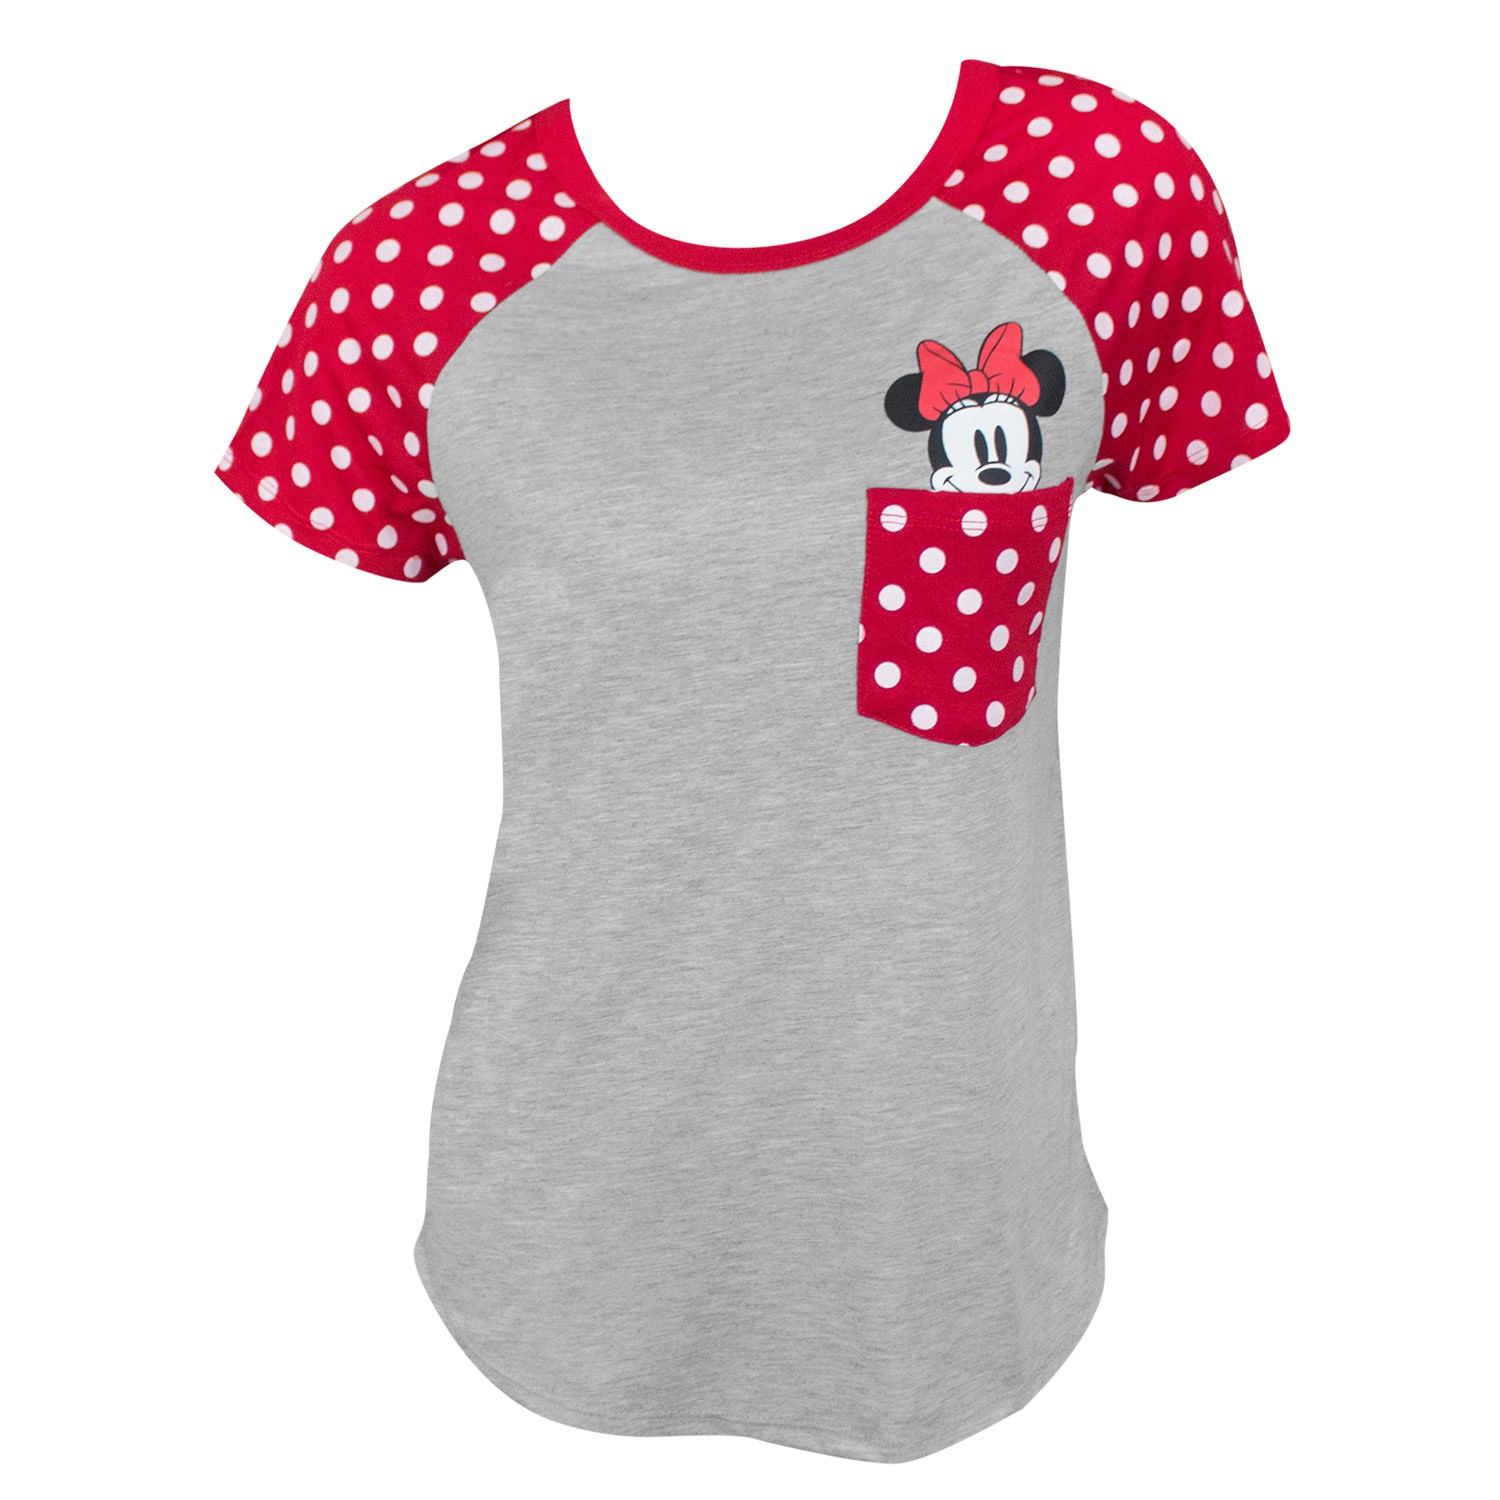 Minnie Mouse Pocket Sized Women's Grey Tee Shirt